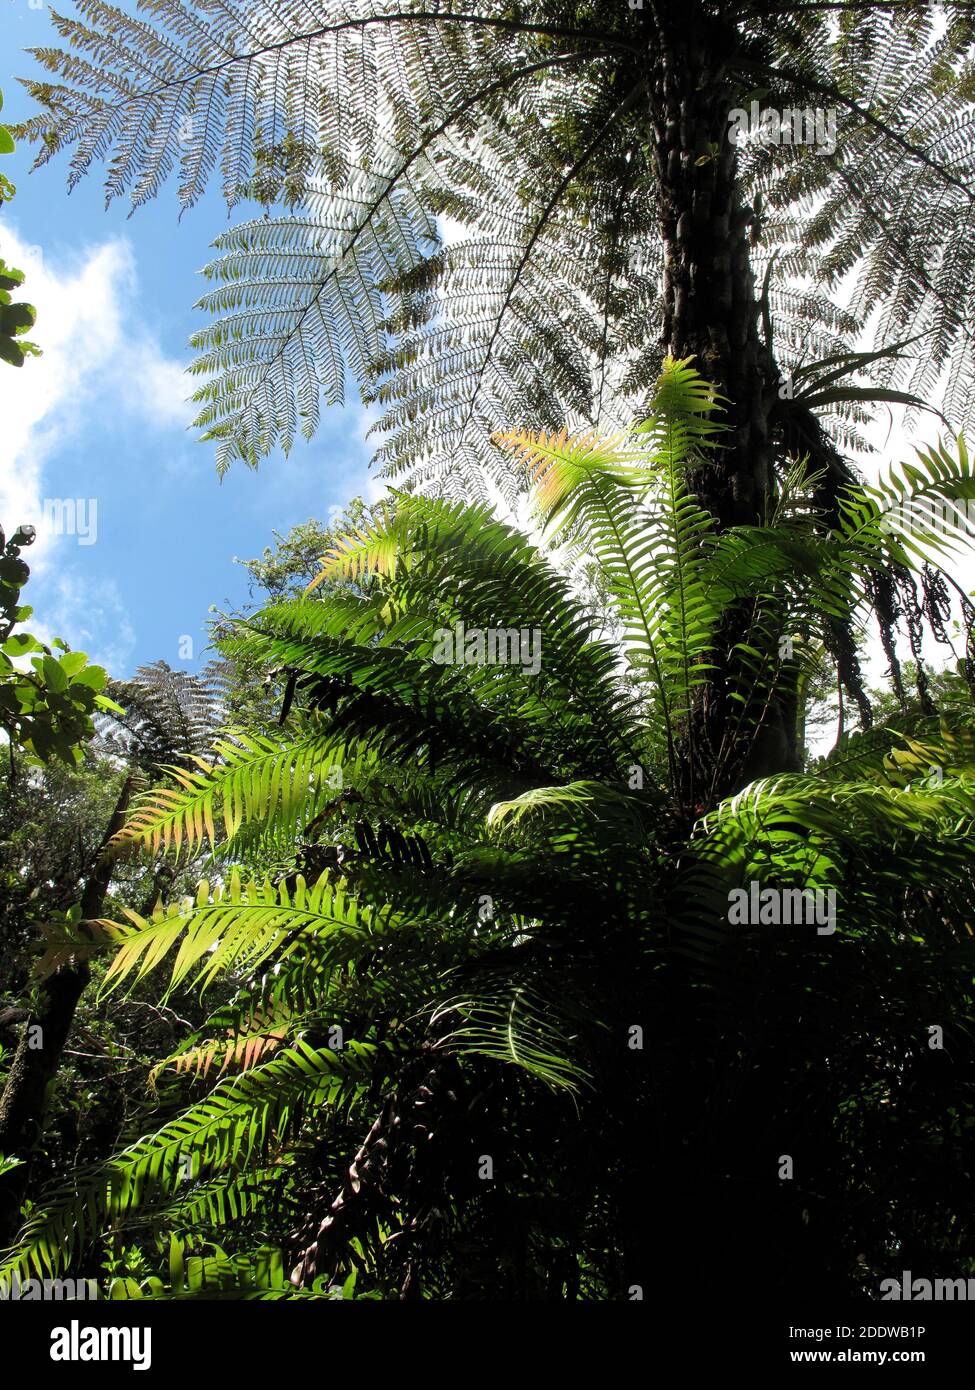 Epiphytic fern (Blechnum attenuatum) growing on tree fern (Cyathea glauca)  on Reunion island (the tree fern is tripinnate and the fern is bipinnate) Stock Photo